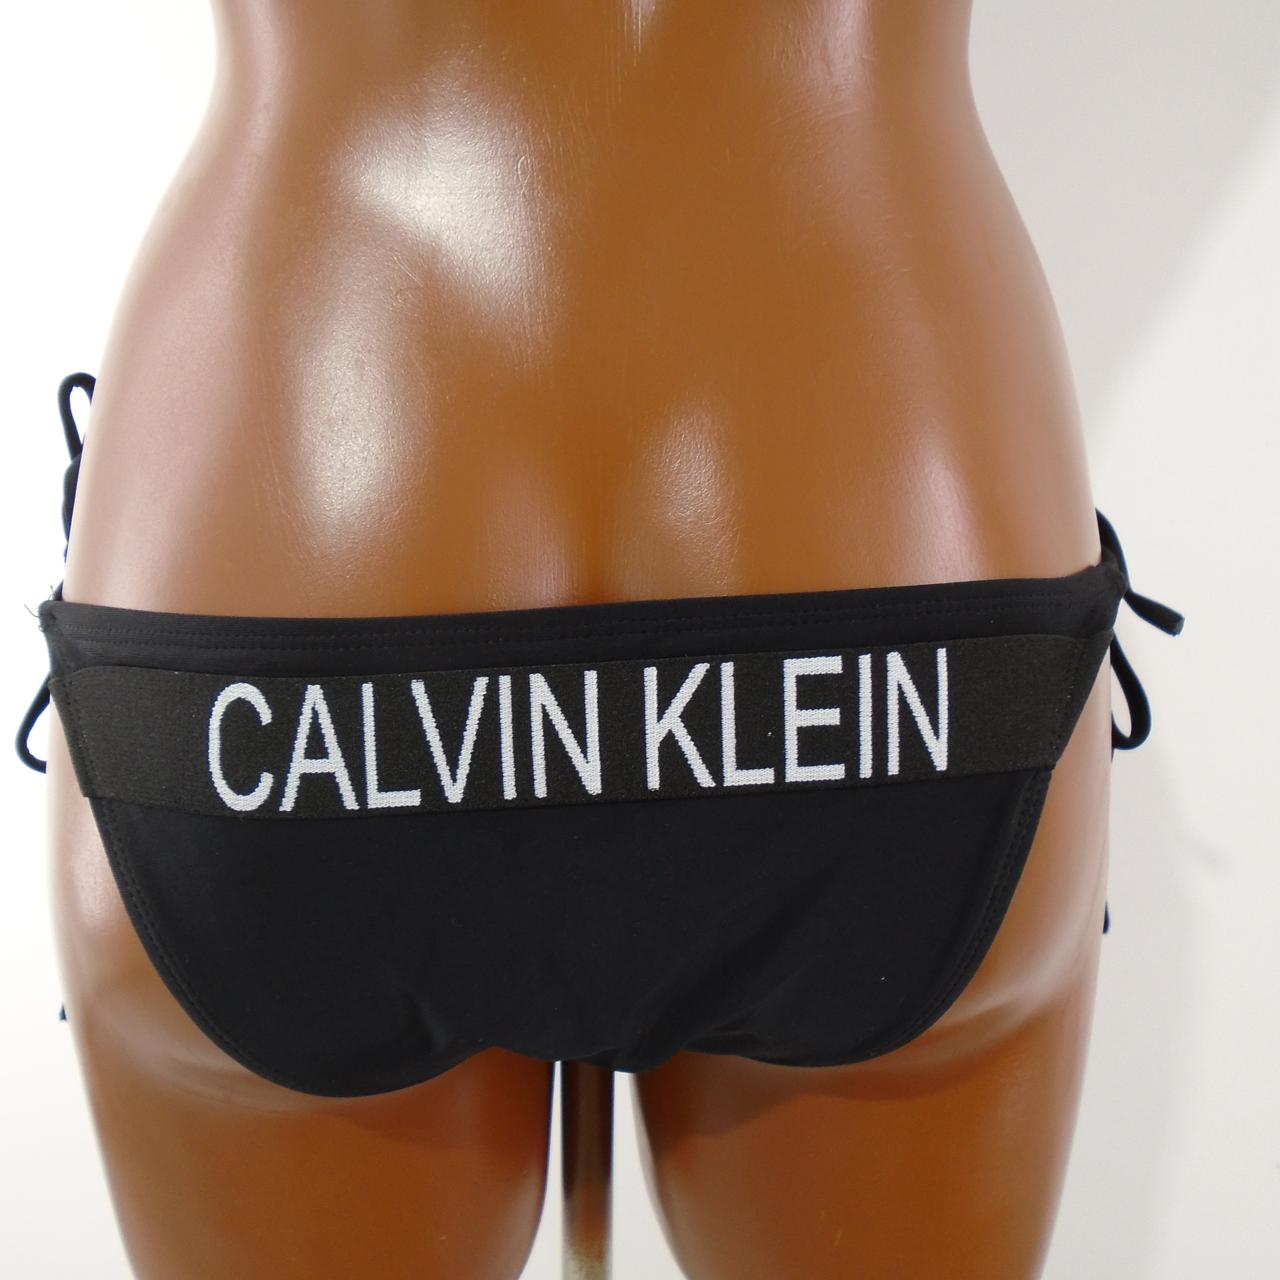 Women's Swimsuit Calvin Klein. Black. S. Used. Good